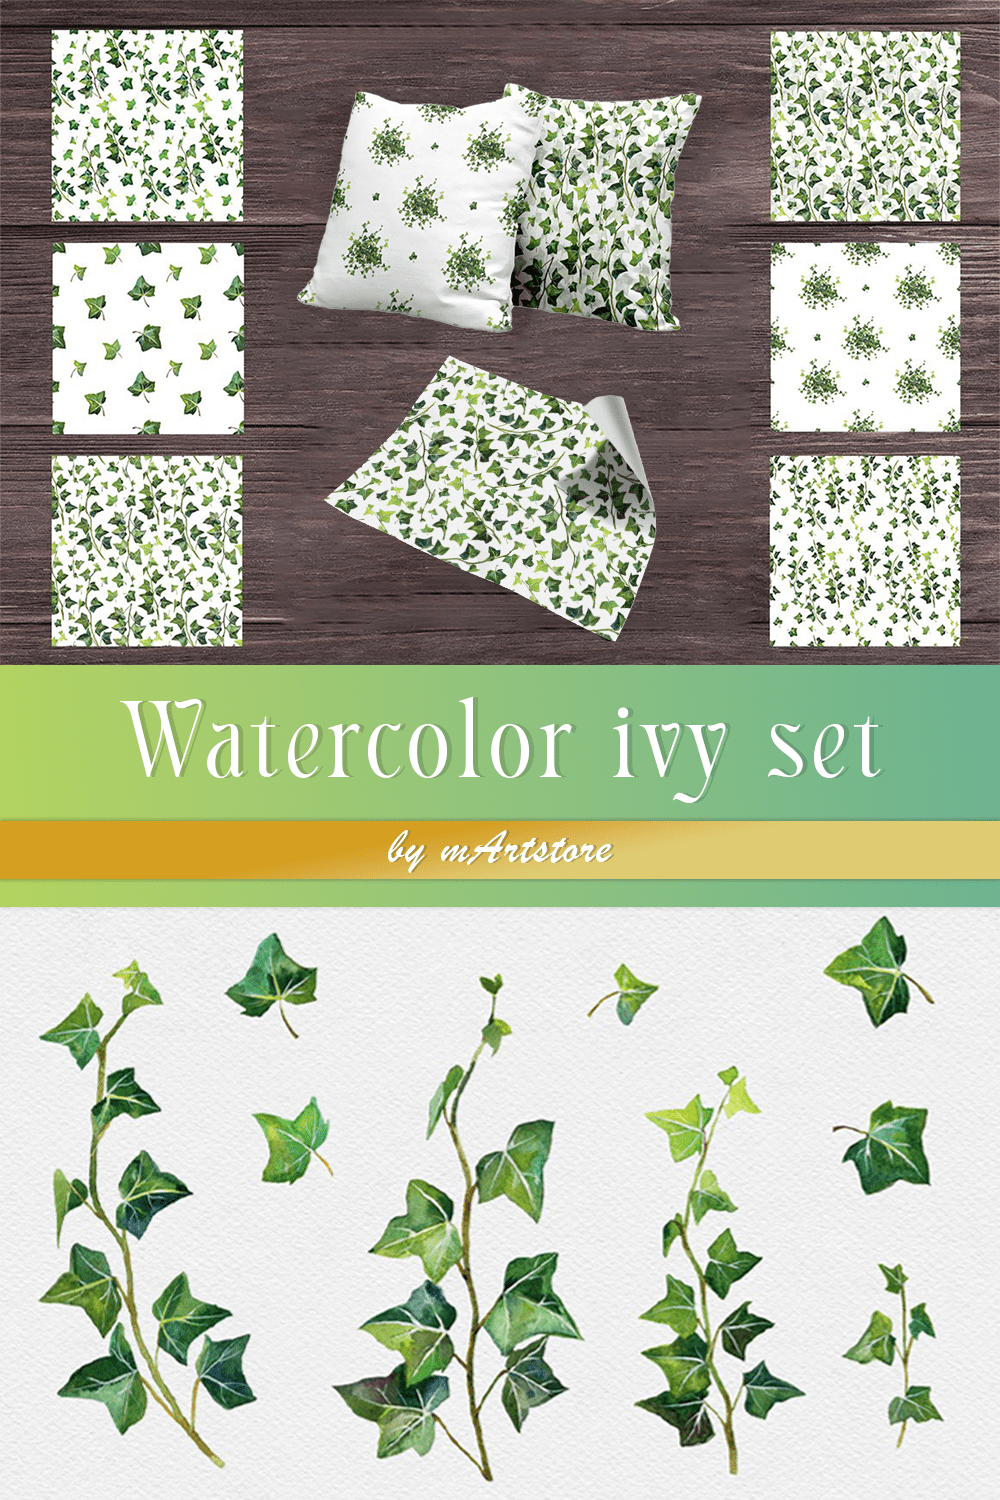 watercolor ivy set pinterest